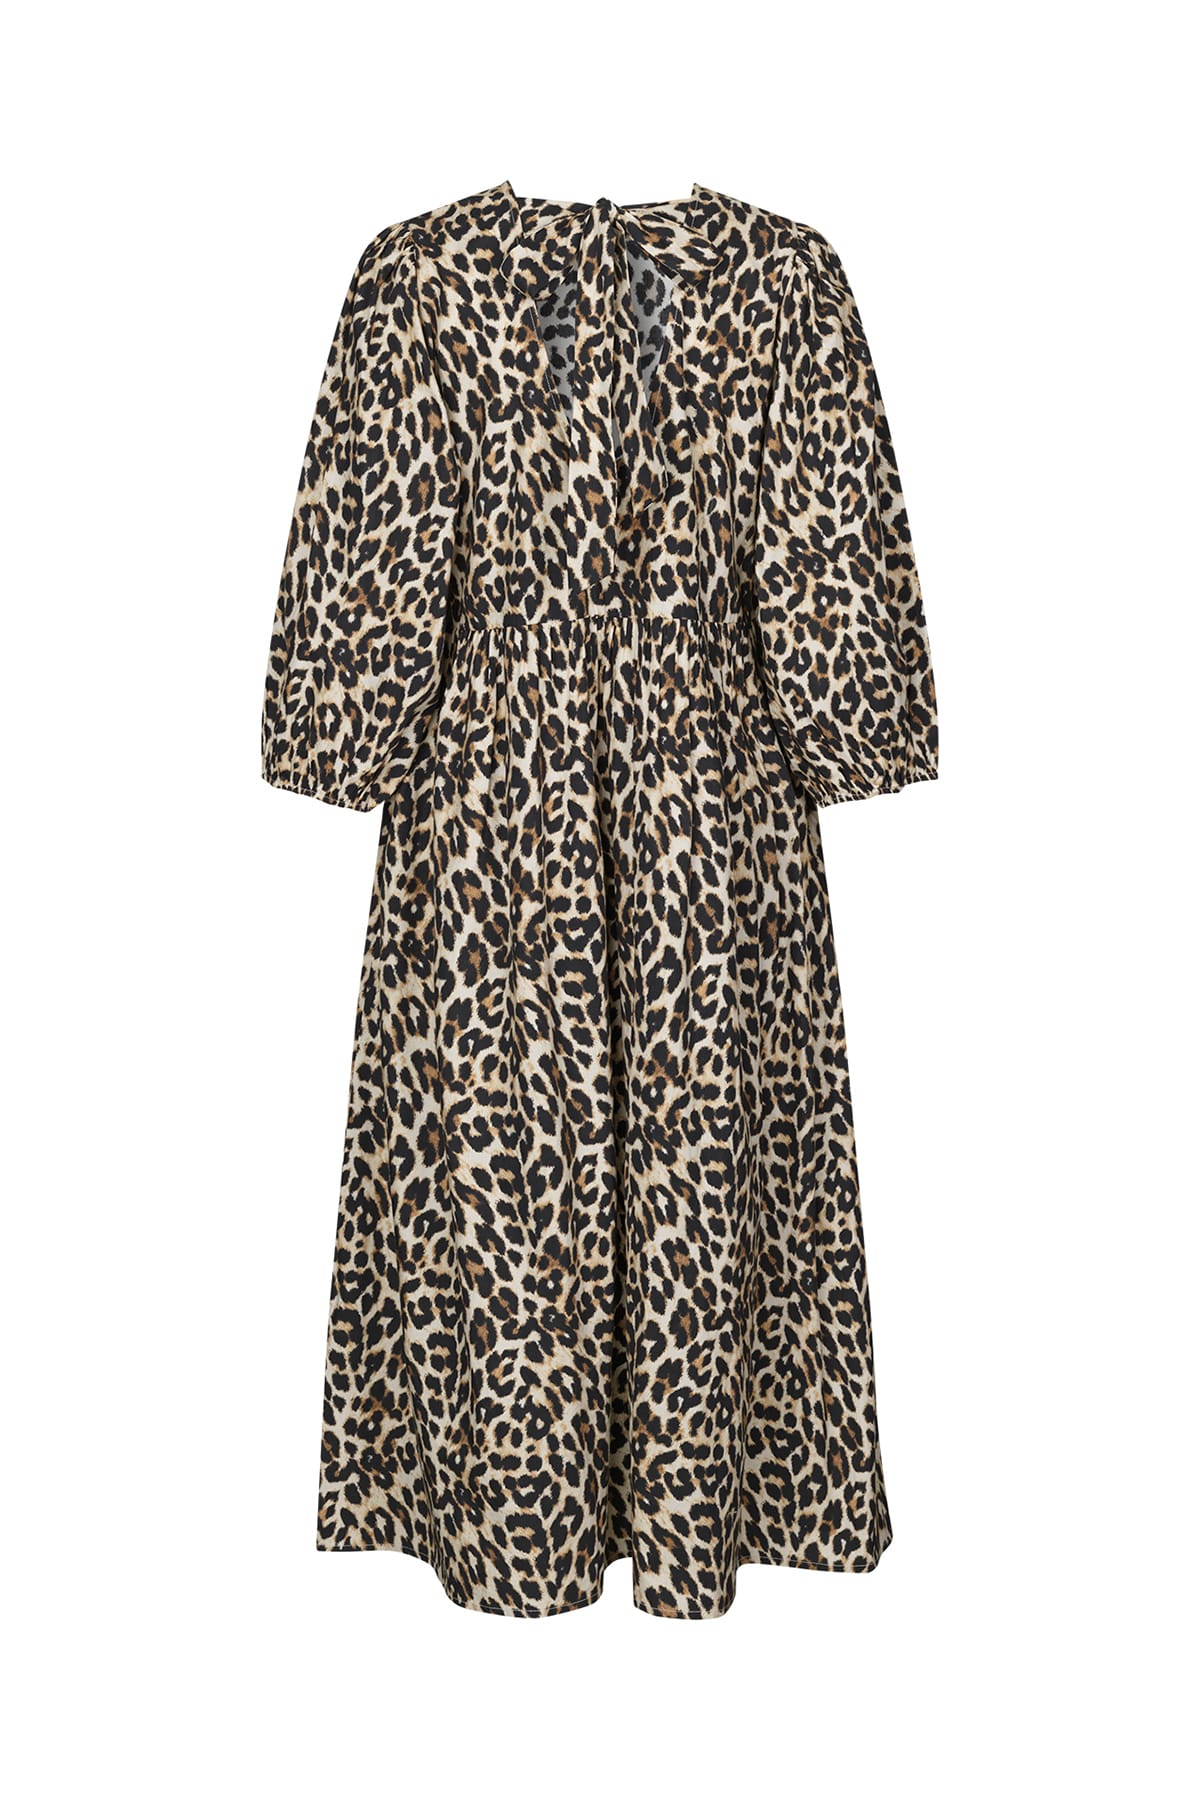 Kleider Marion Dress Leopard Print Kleider Lollys Laundry 